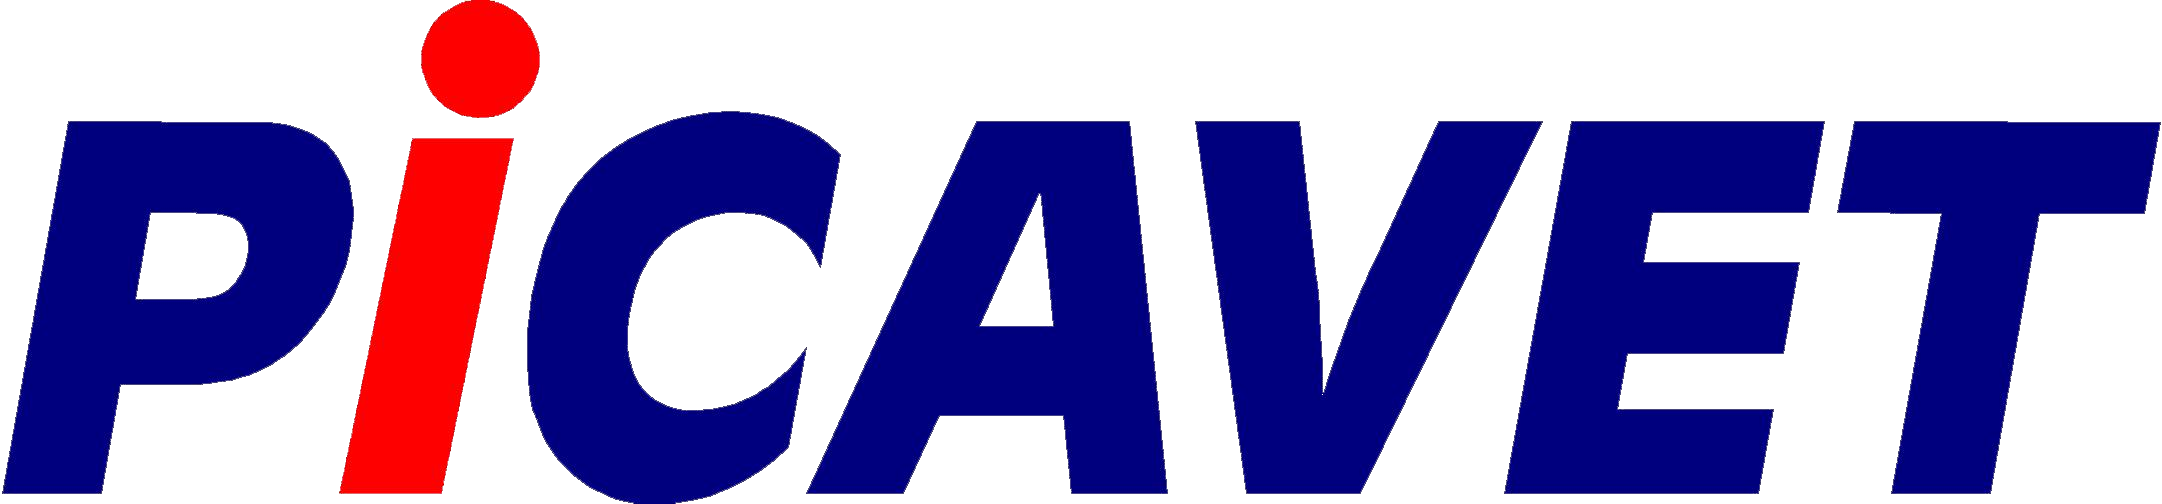 Logo Picavet Transports